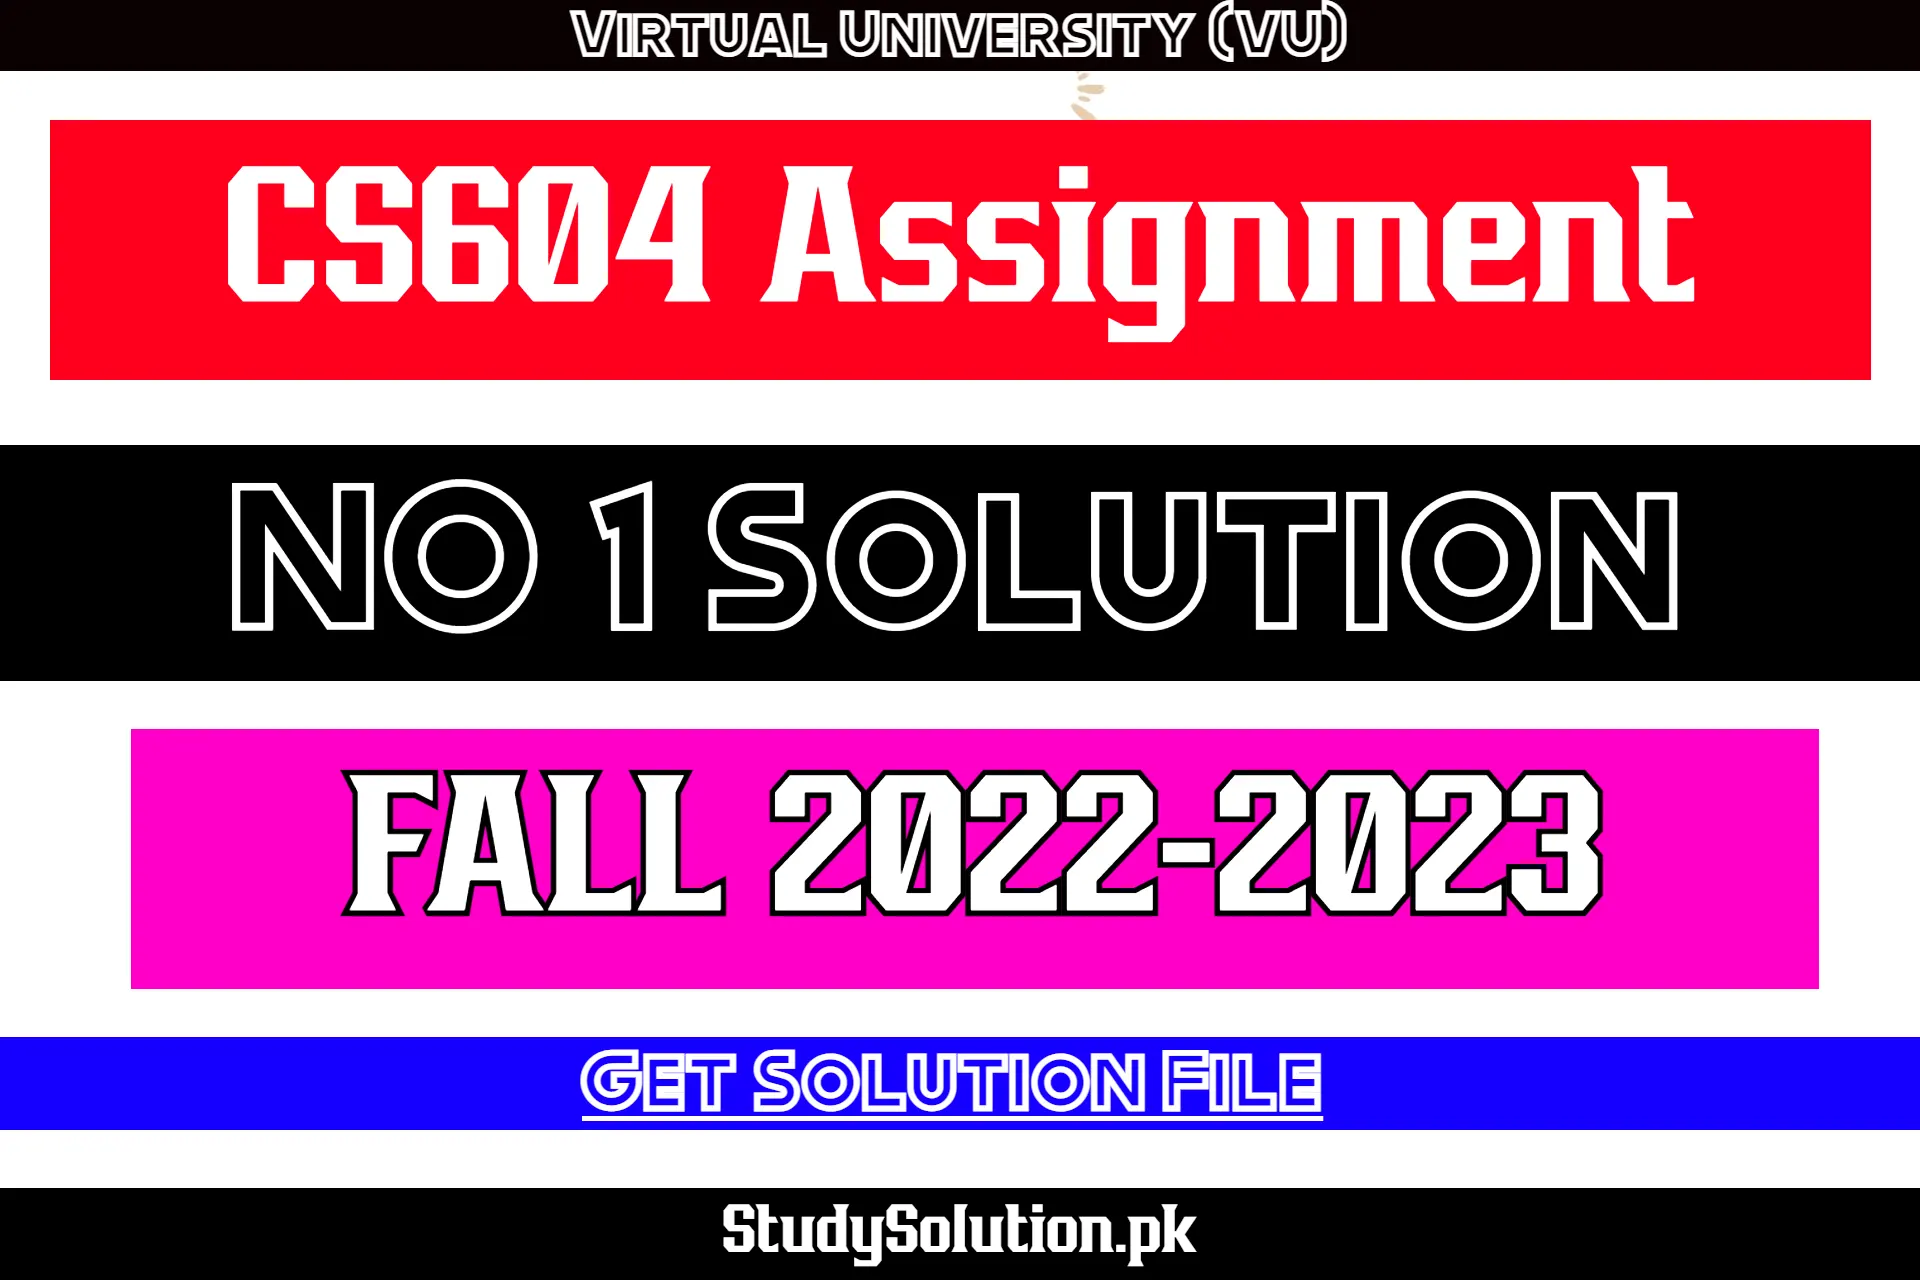 CS604 Assignment No 1 Solution Fall 2022